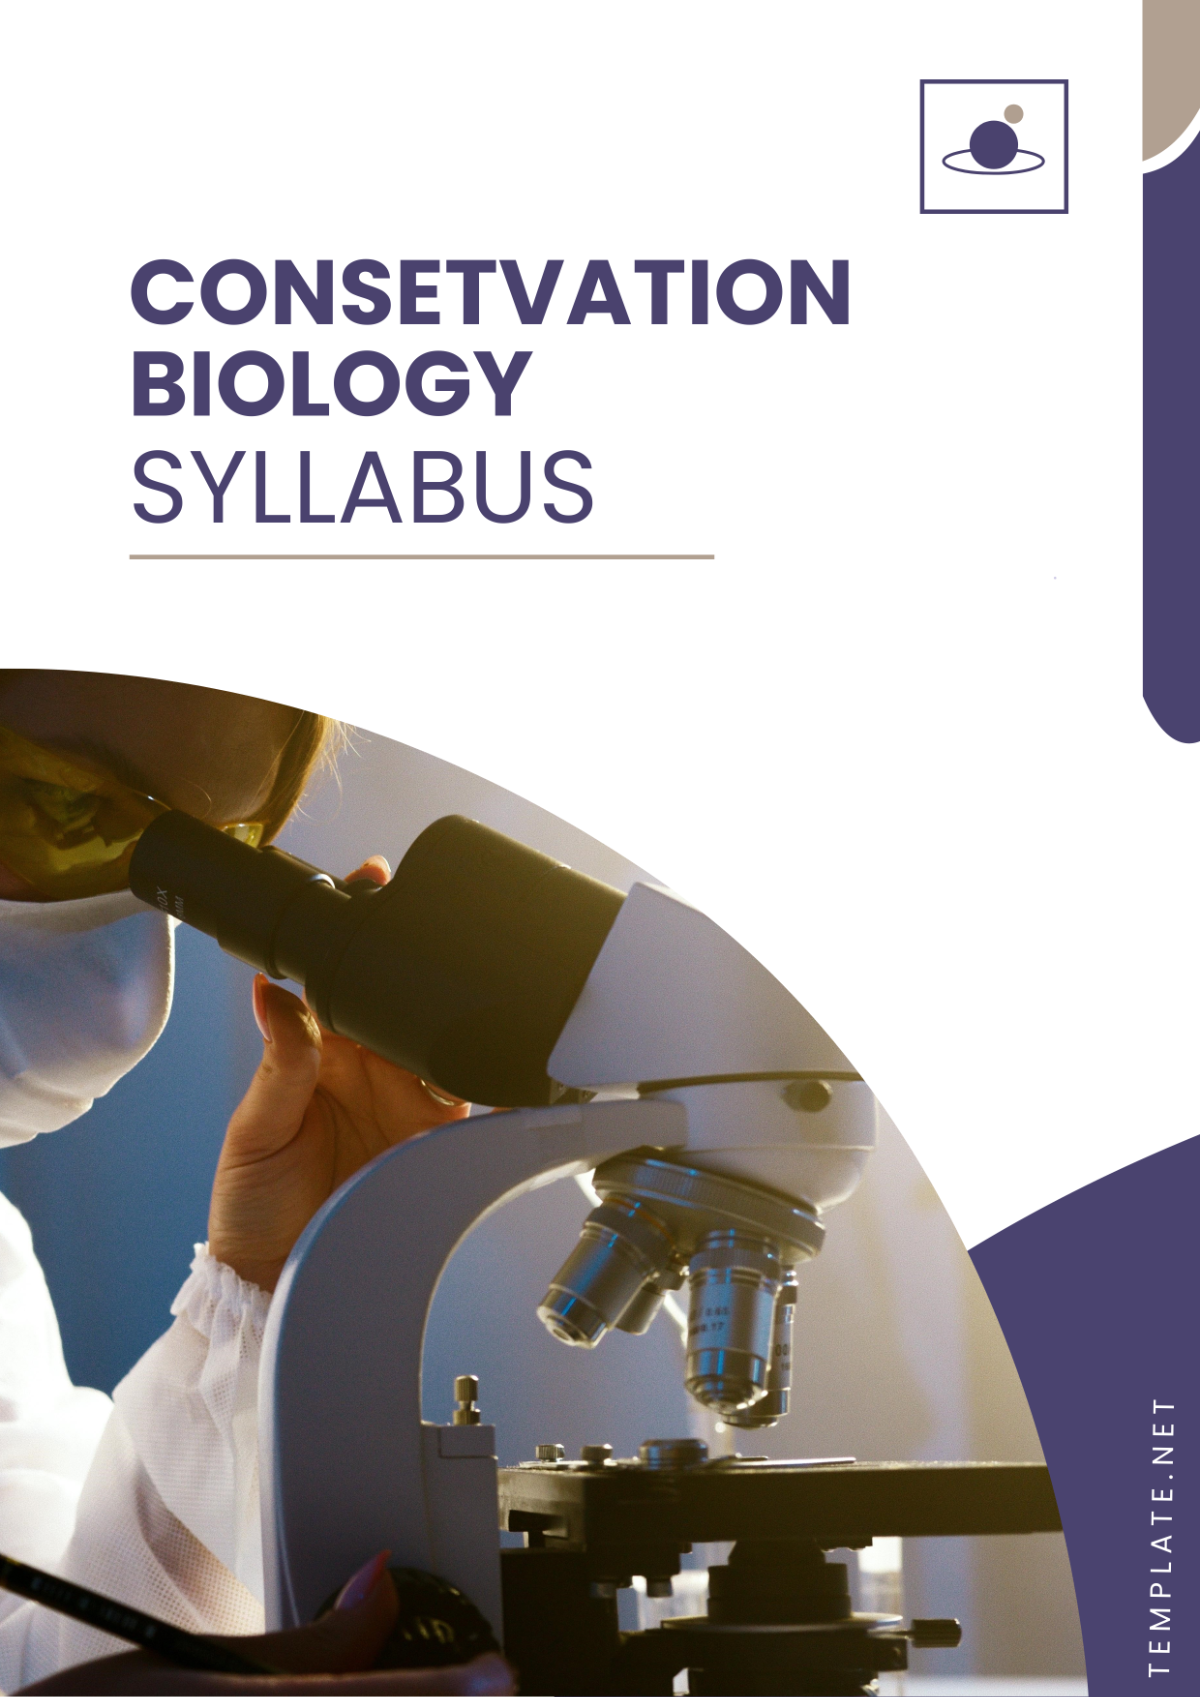 Conservation Biology Syllabus Template